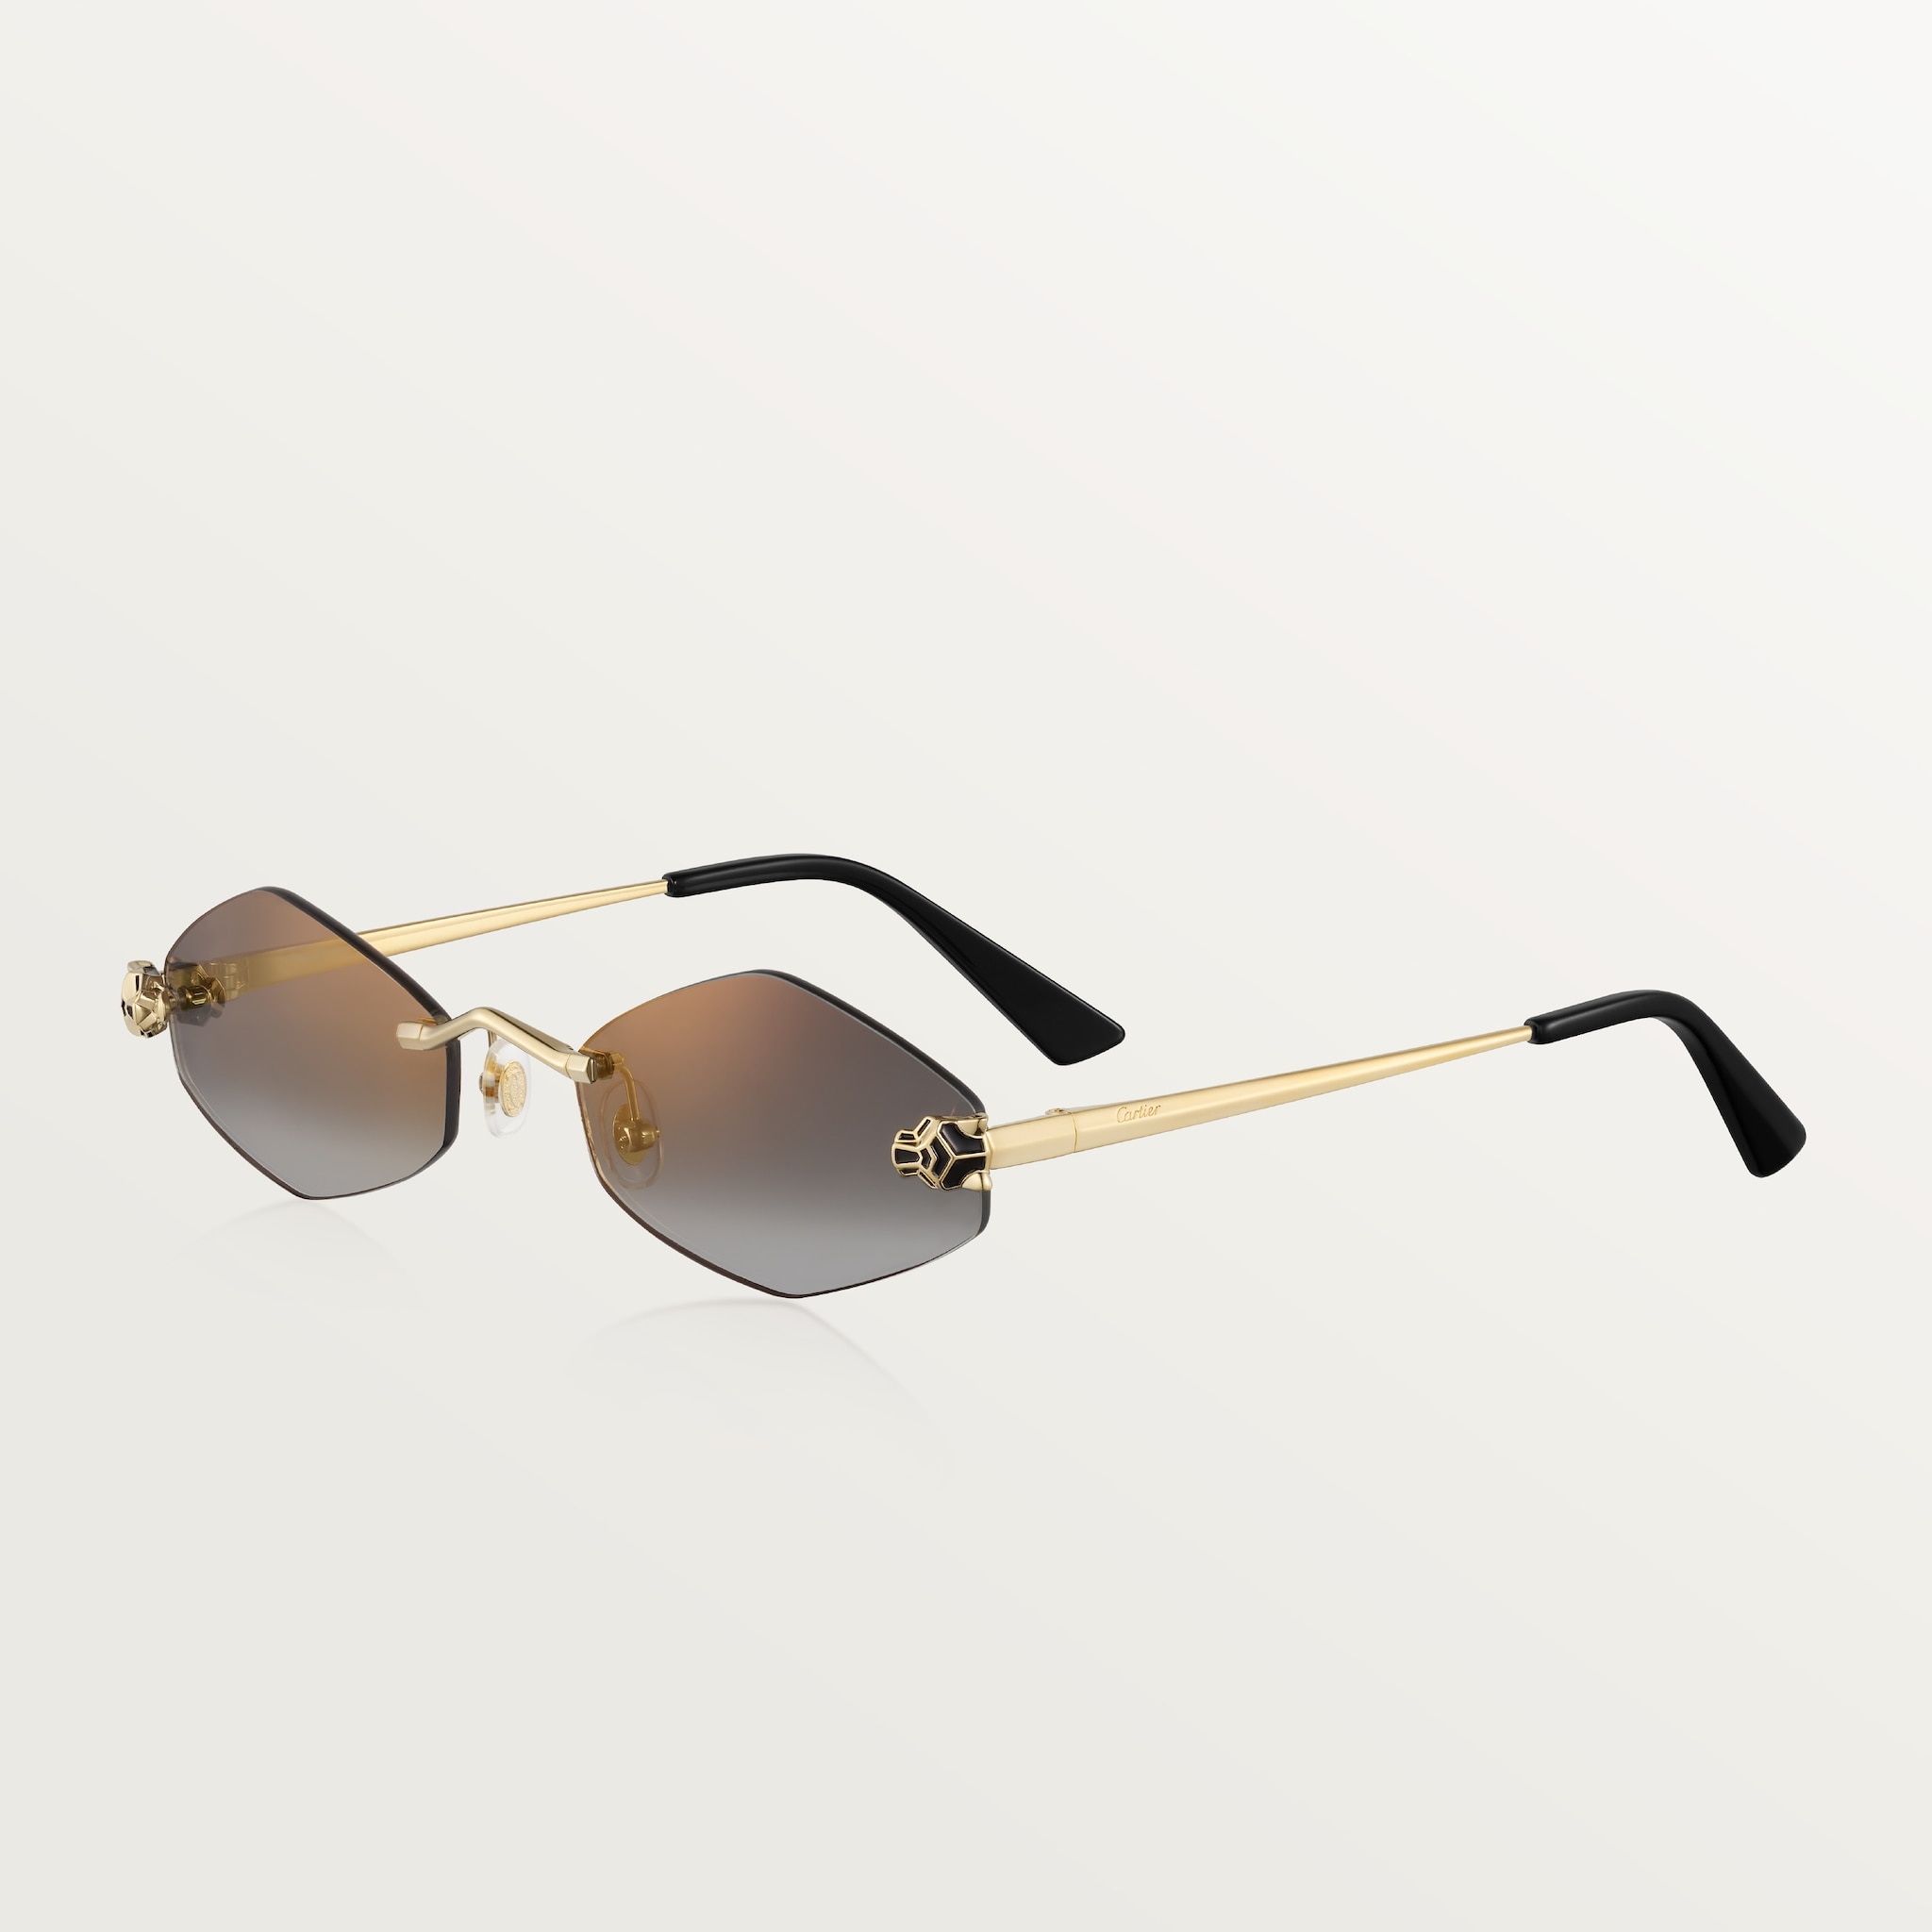 Panthère de Cartier sunglassesSmooth golden-finish metal, graduated grey lenses